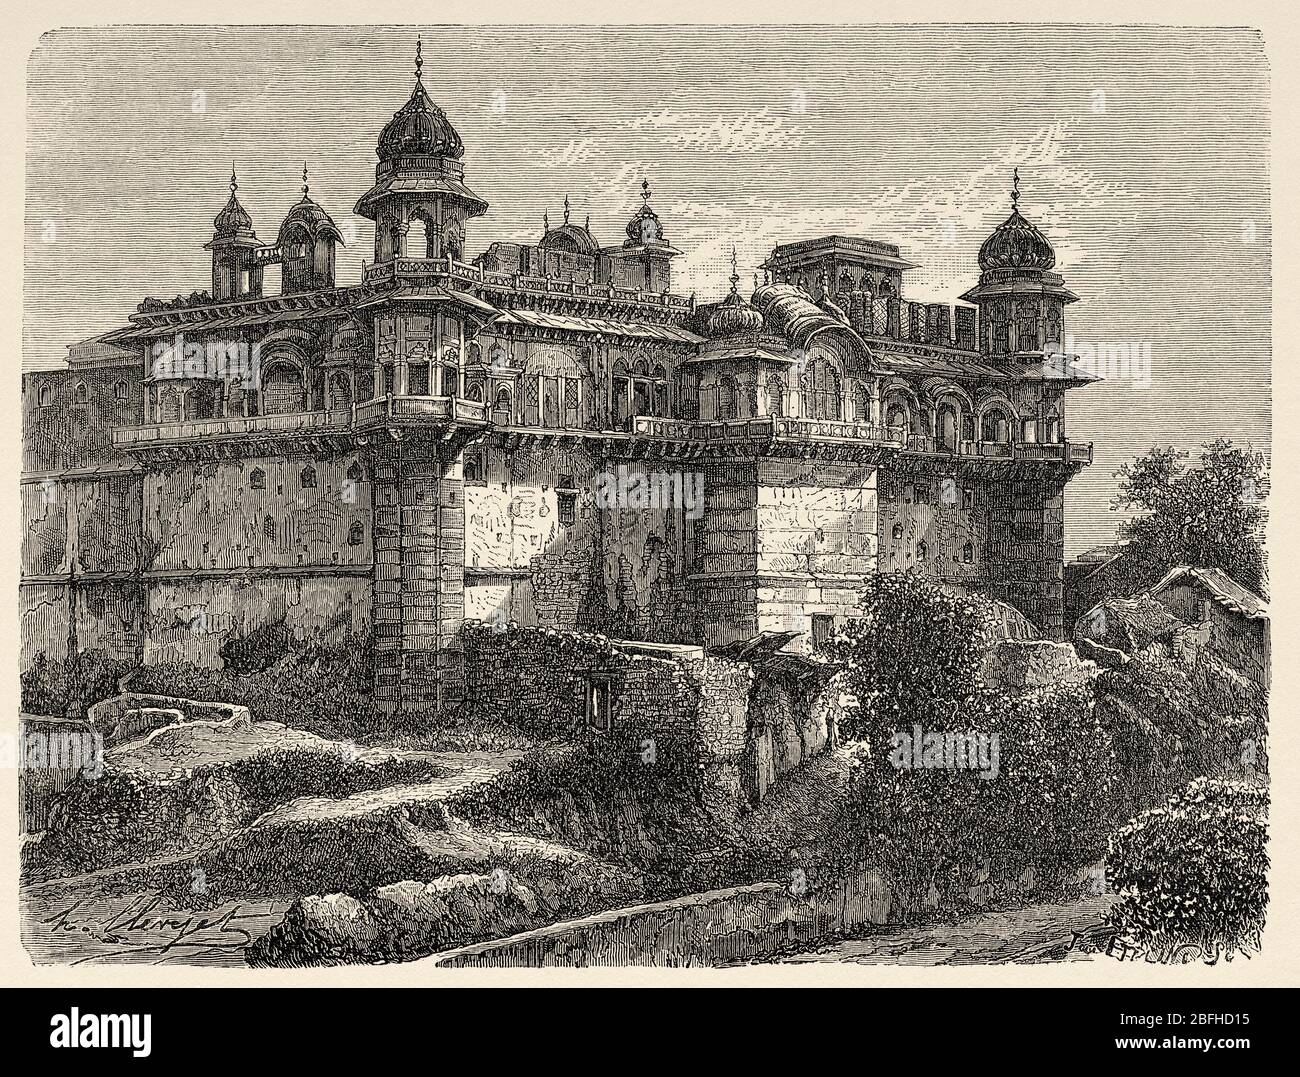 Old Dourjun salt palace at Bhurtpore, India. Old engraving illustration from El Mundo en la Mano 1878 Stock Photo